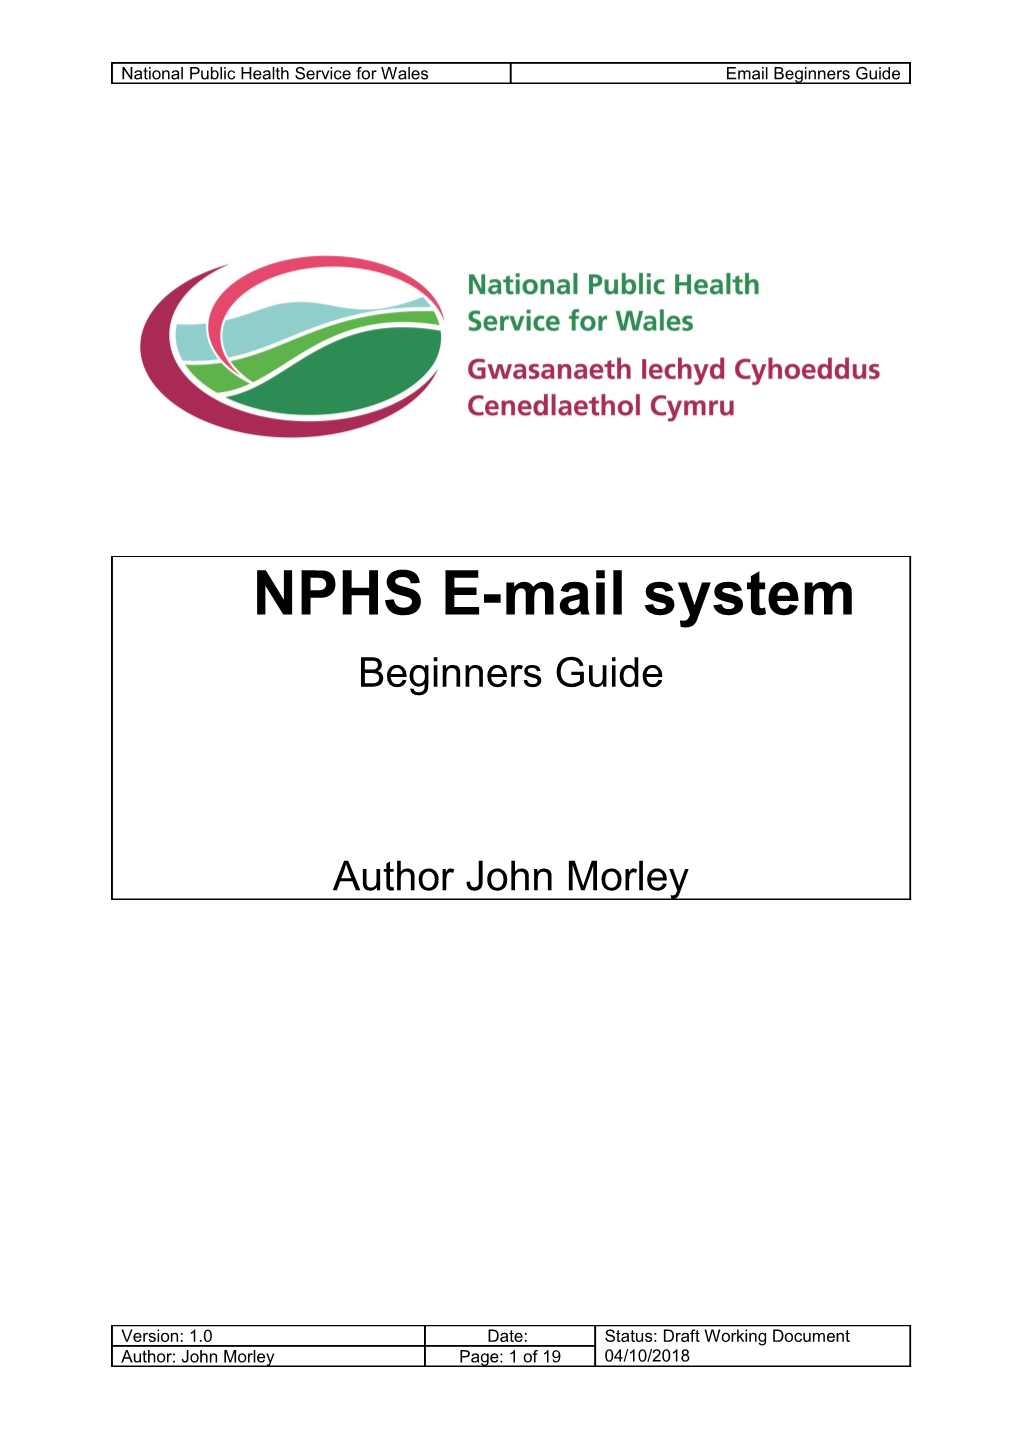 NPHS E-Mail System